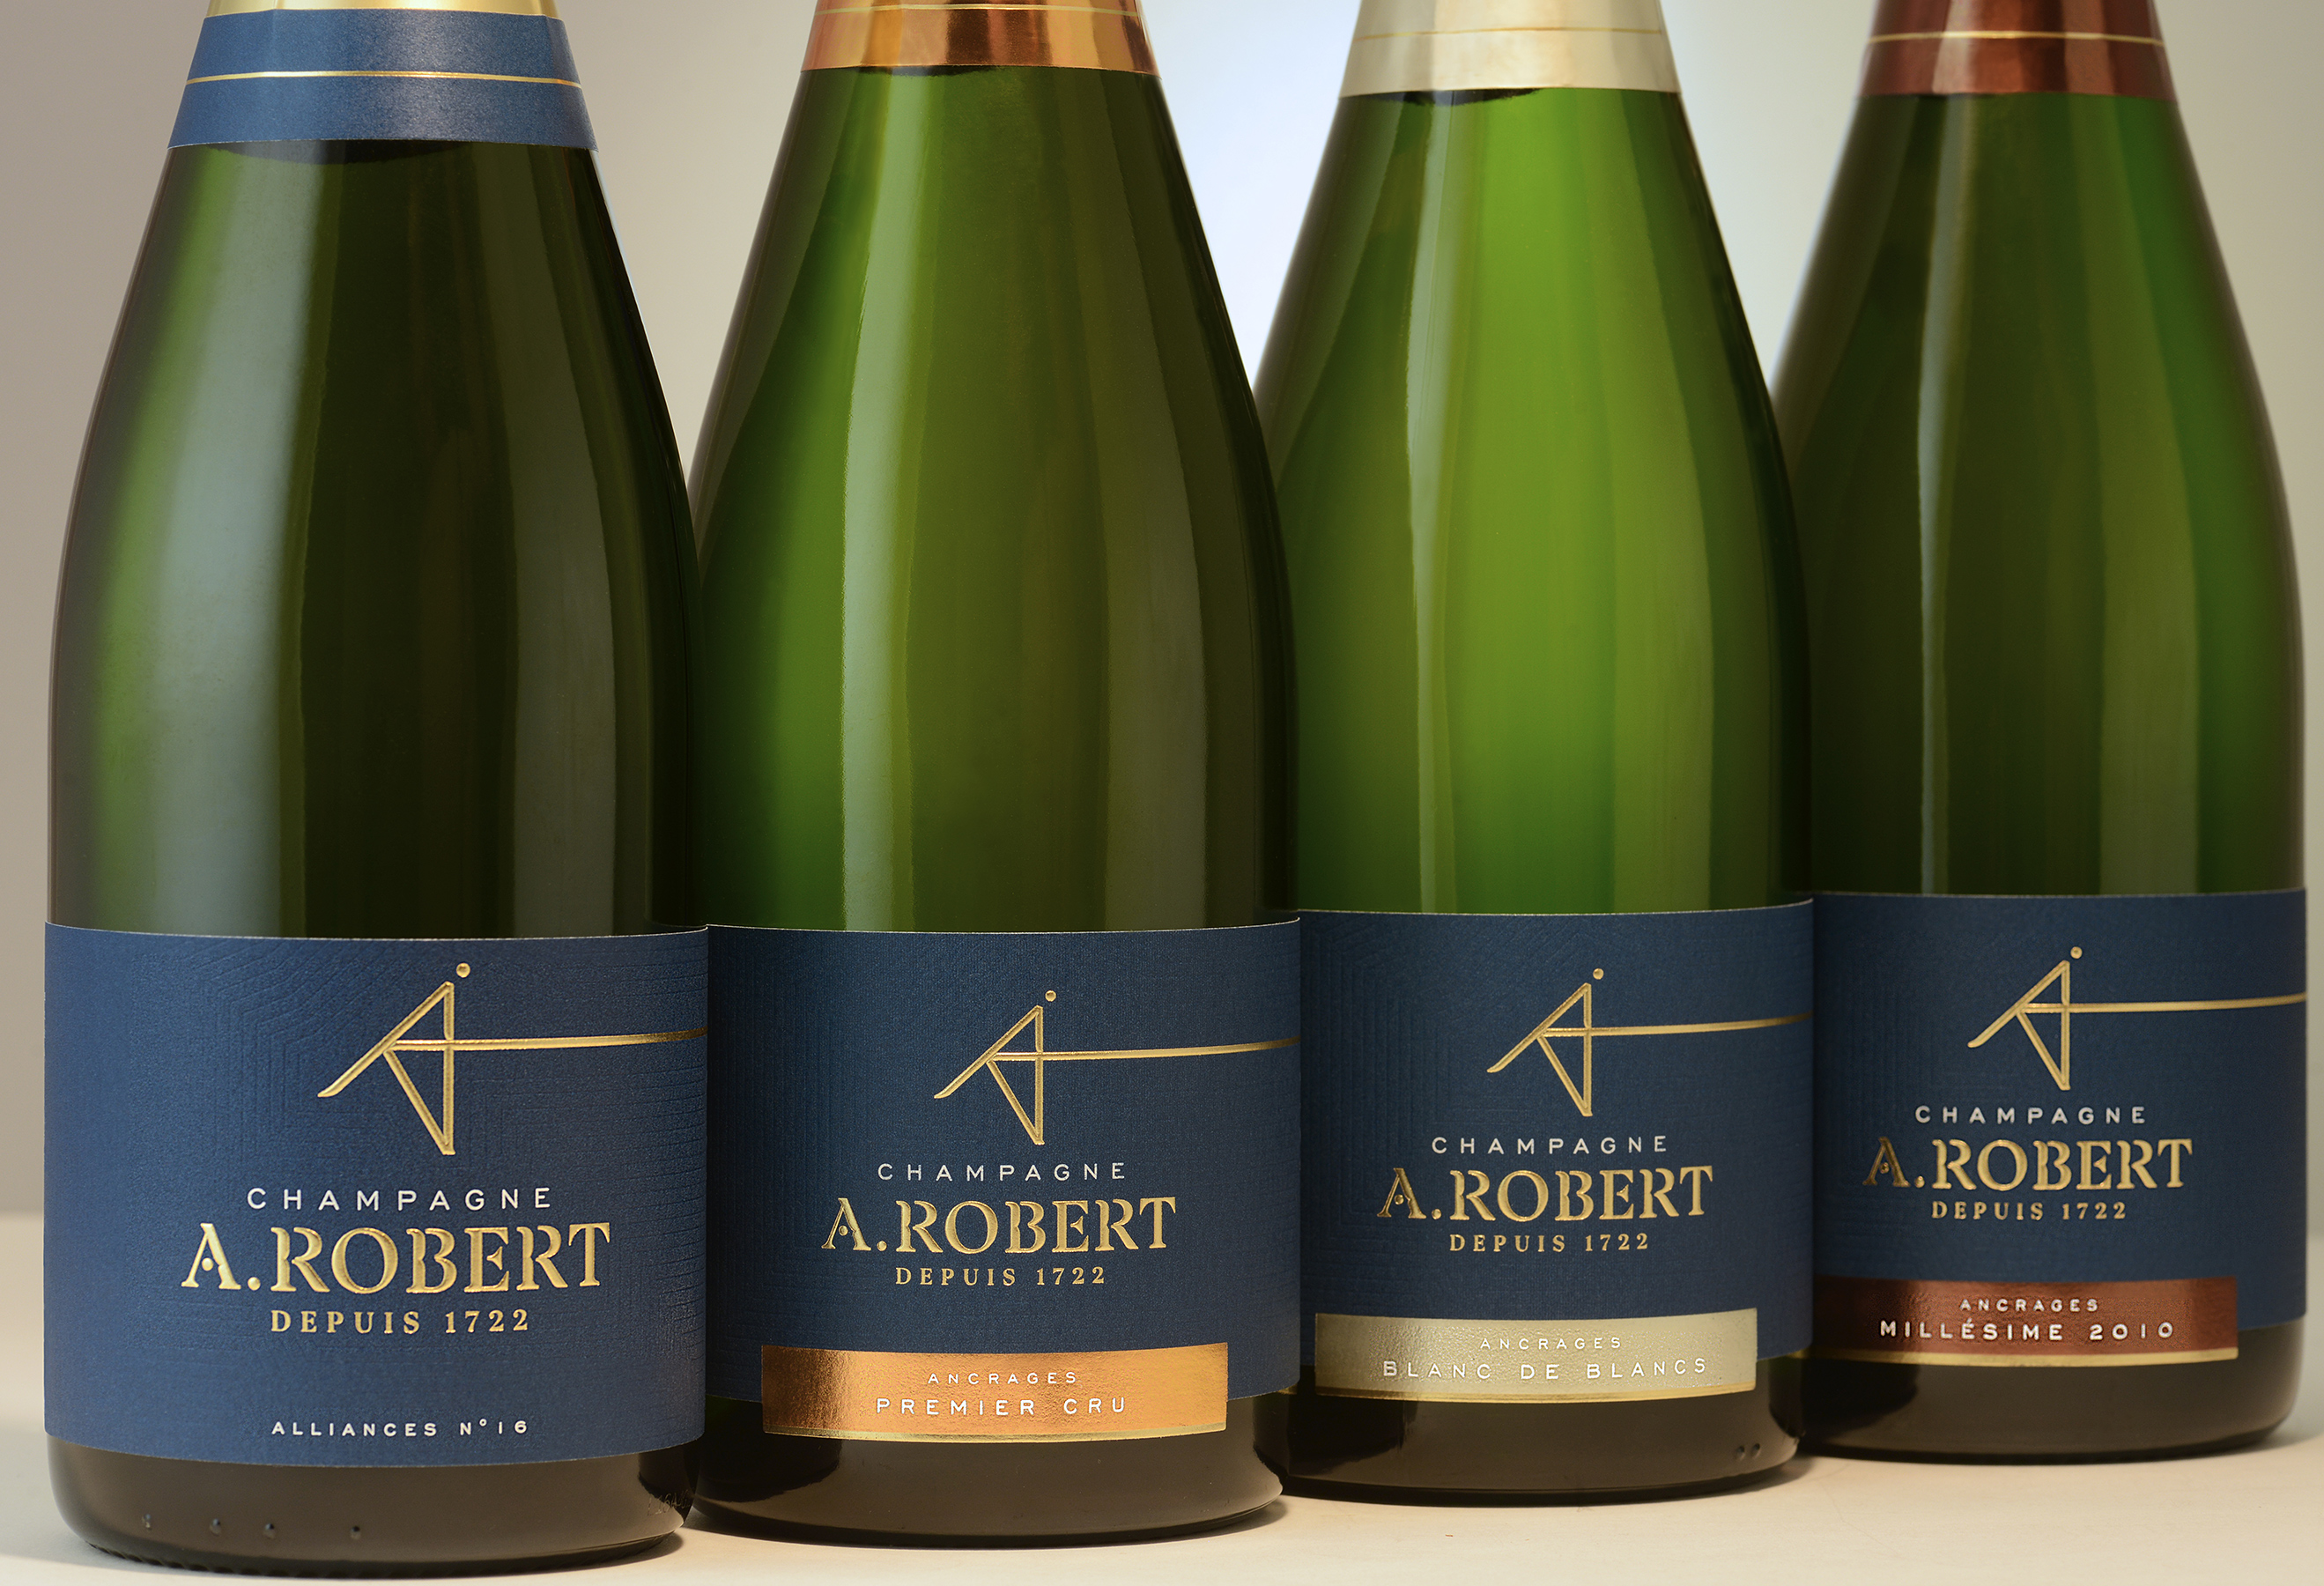 Robert champagne